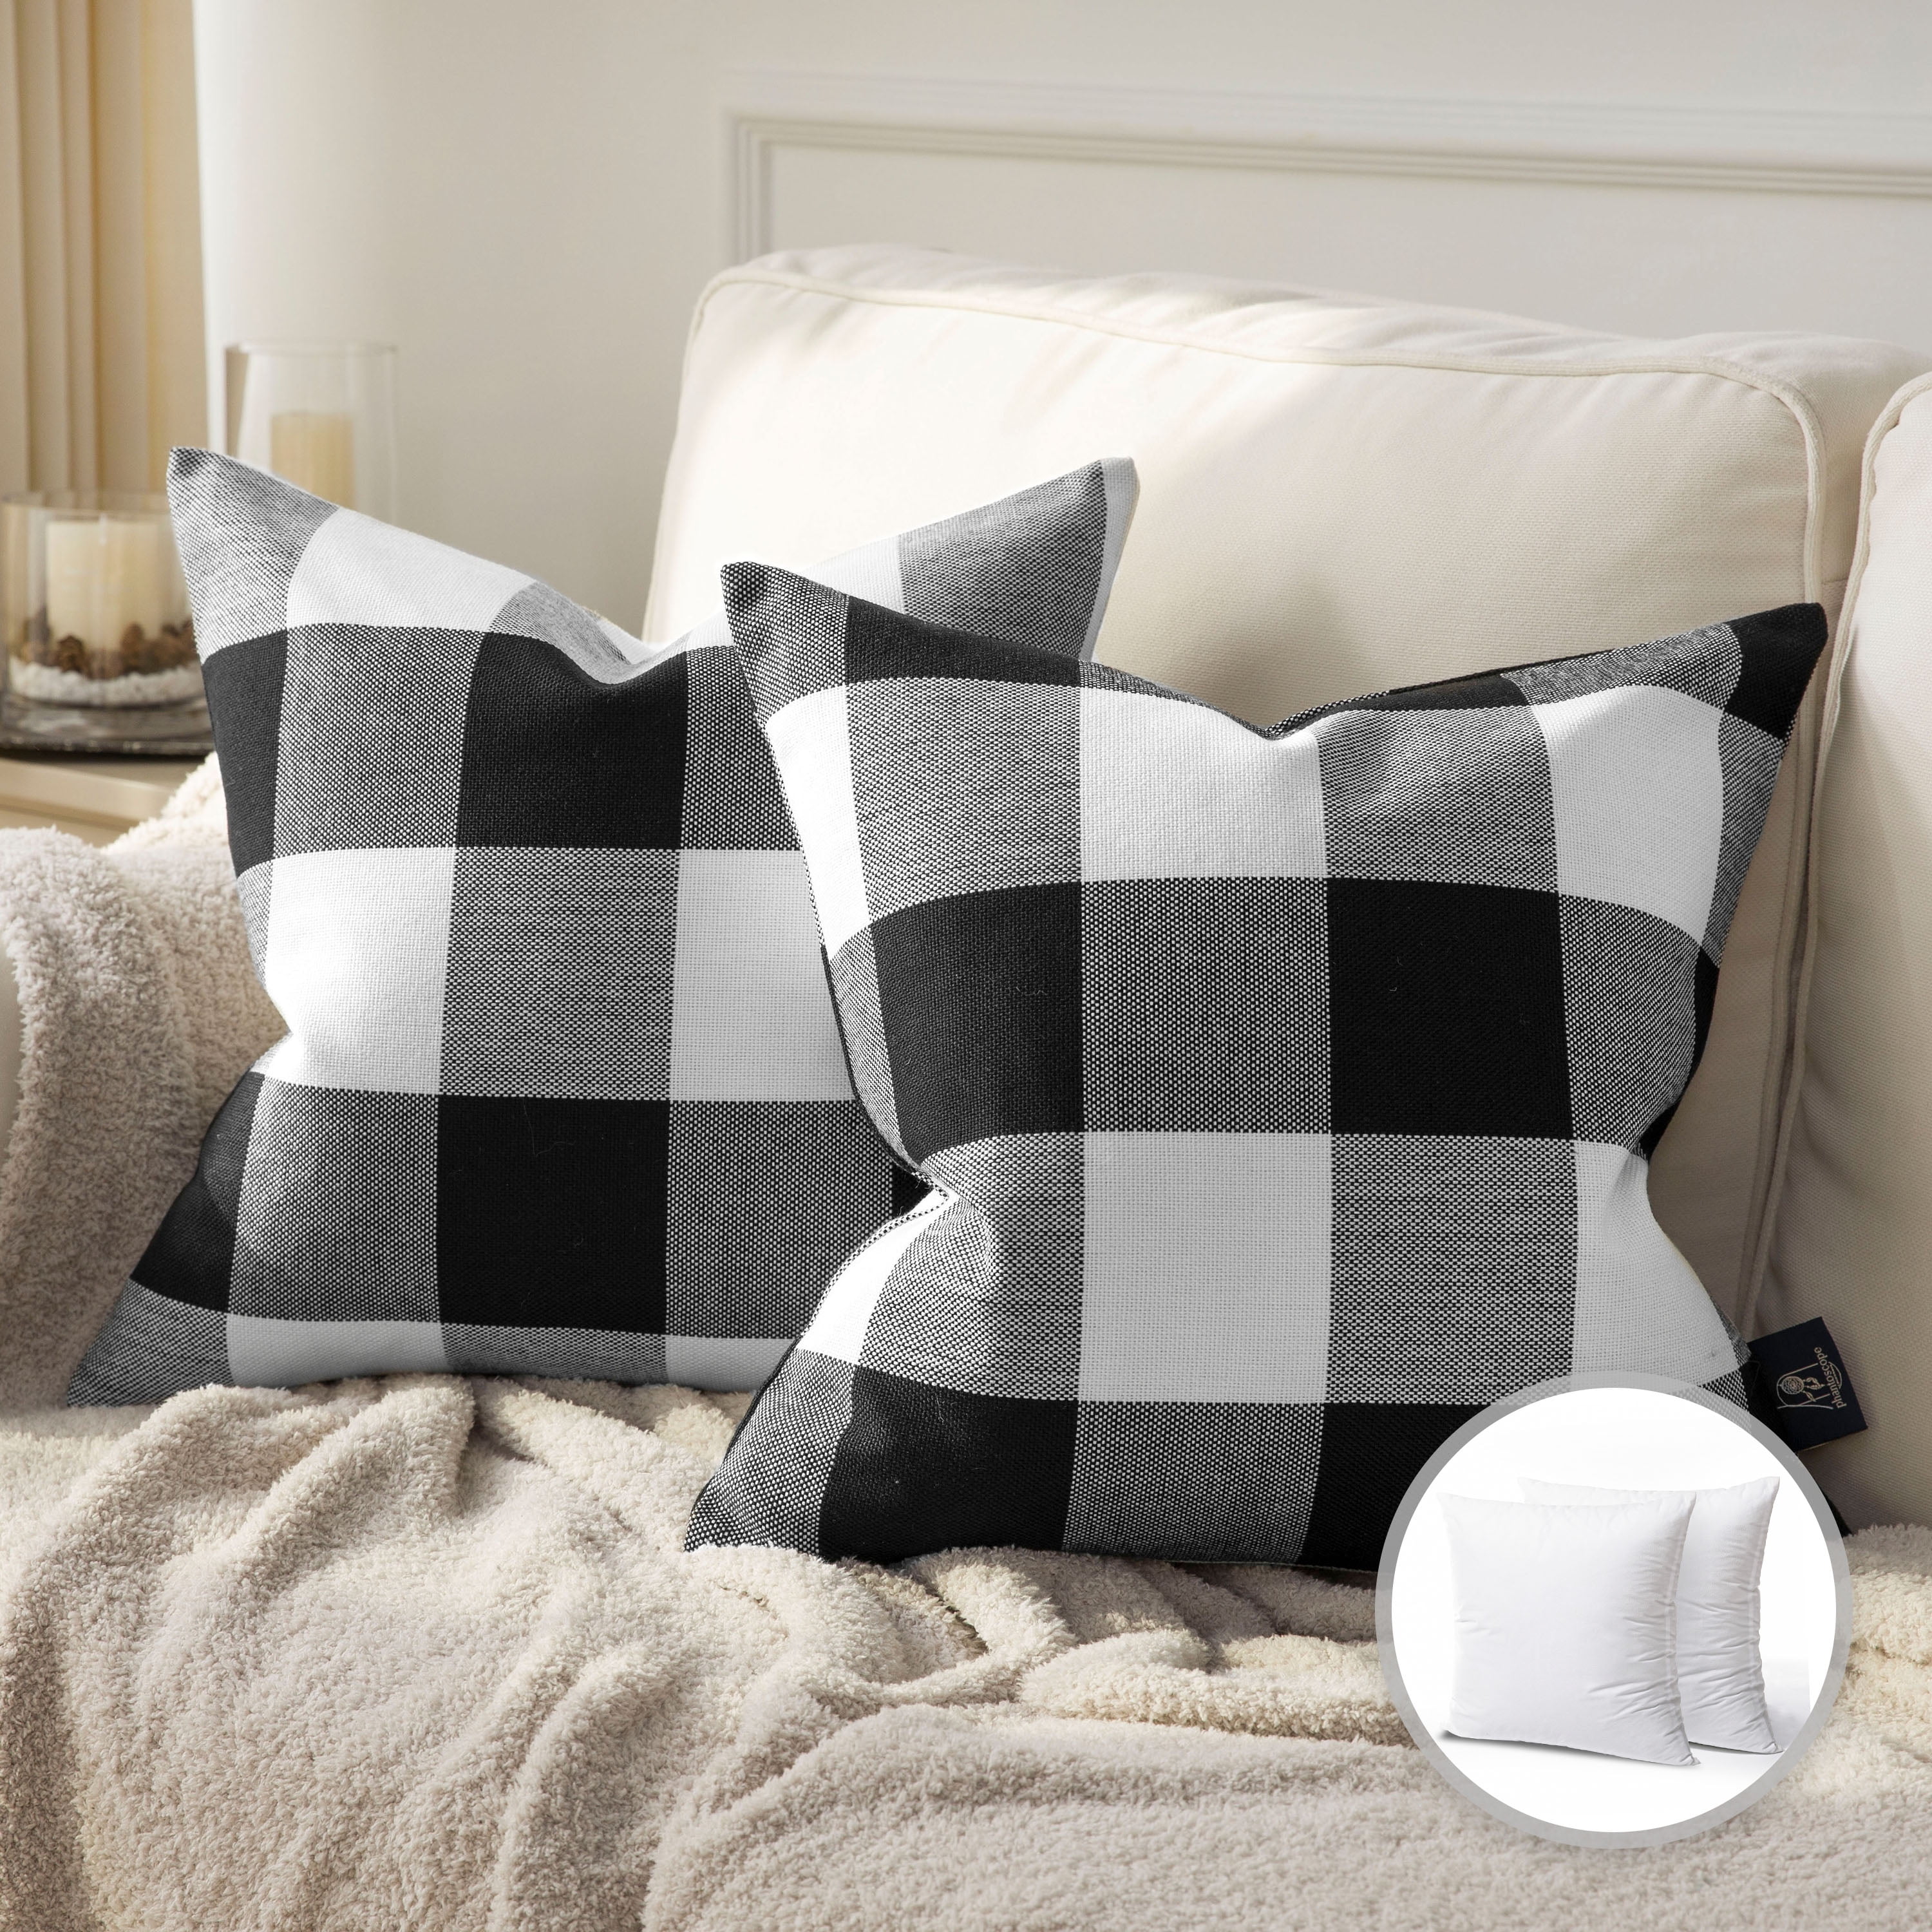 Soft Corduroy Corn Striped Velvet Series Decorative Throw Pillow, 18 inch x 18 inch, Off White, 2 Pack, Phantoscope